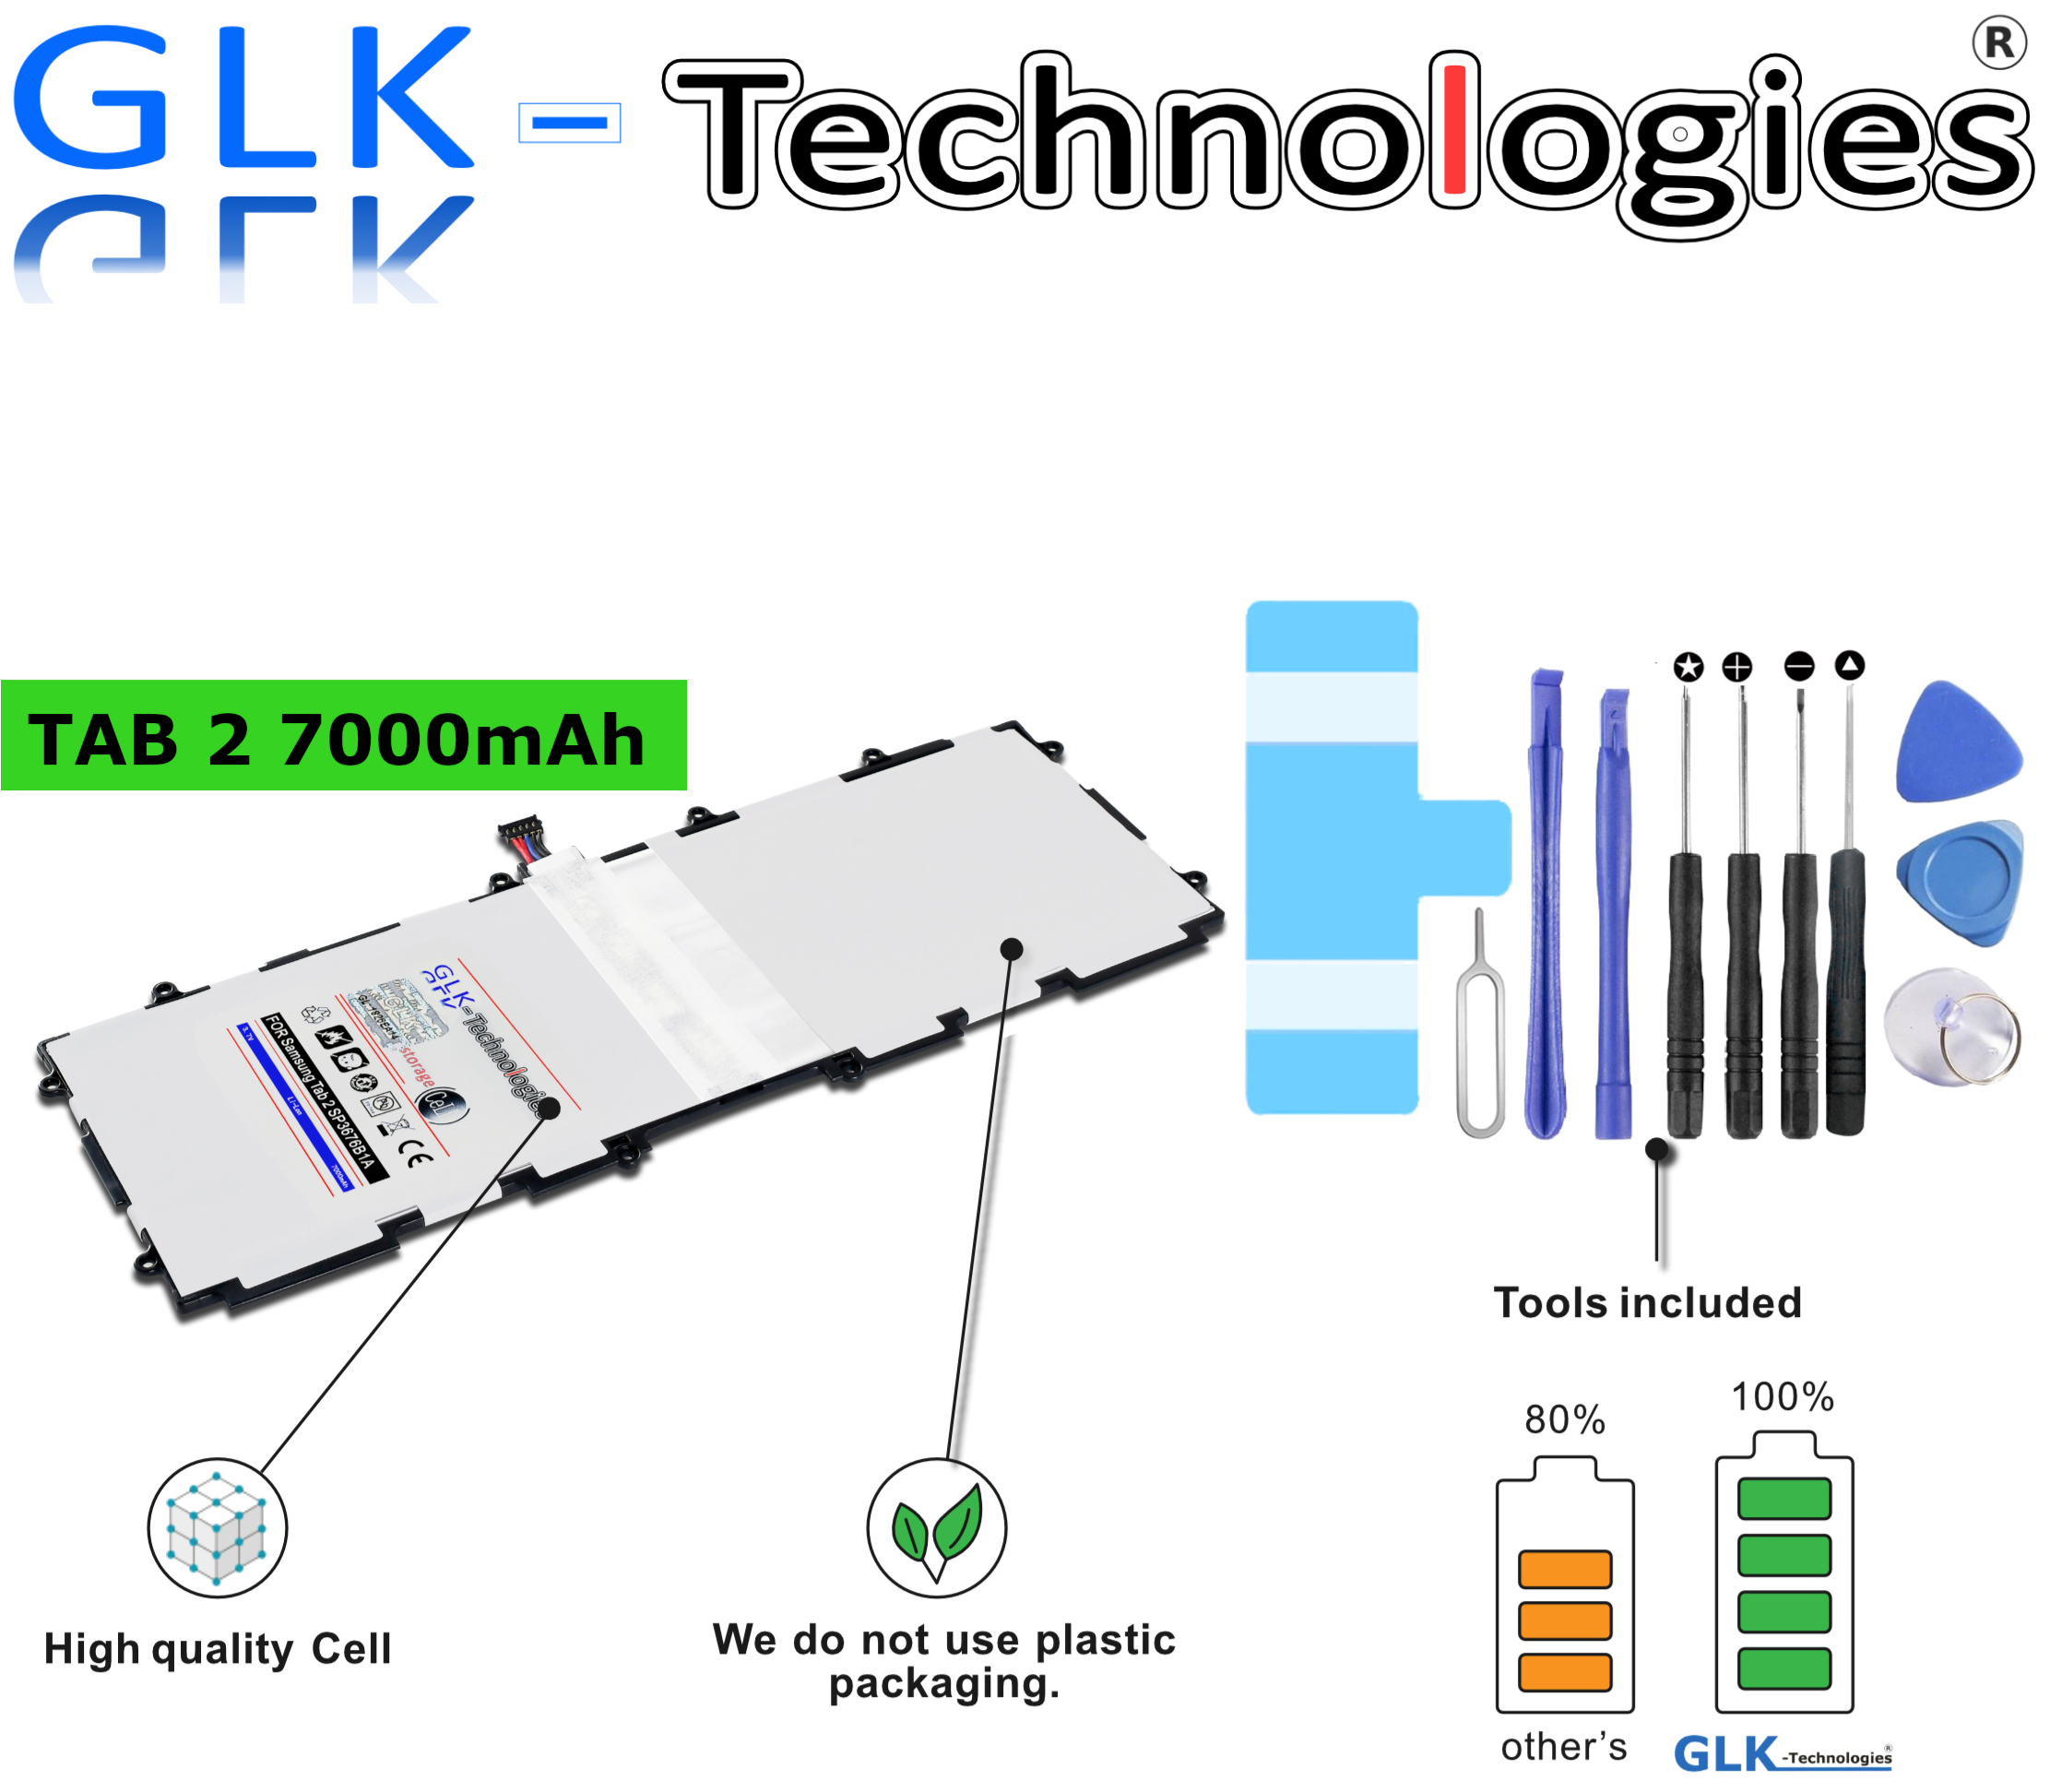 Akku Li-Ion Power Tablet GLK-TECHNOLOGIES Werkzeug Tab für Akku 7000mAh + GT-N8000 Galaxy 2 Tool Akku High Samsung Galaxy GT-N8010 Ersatz